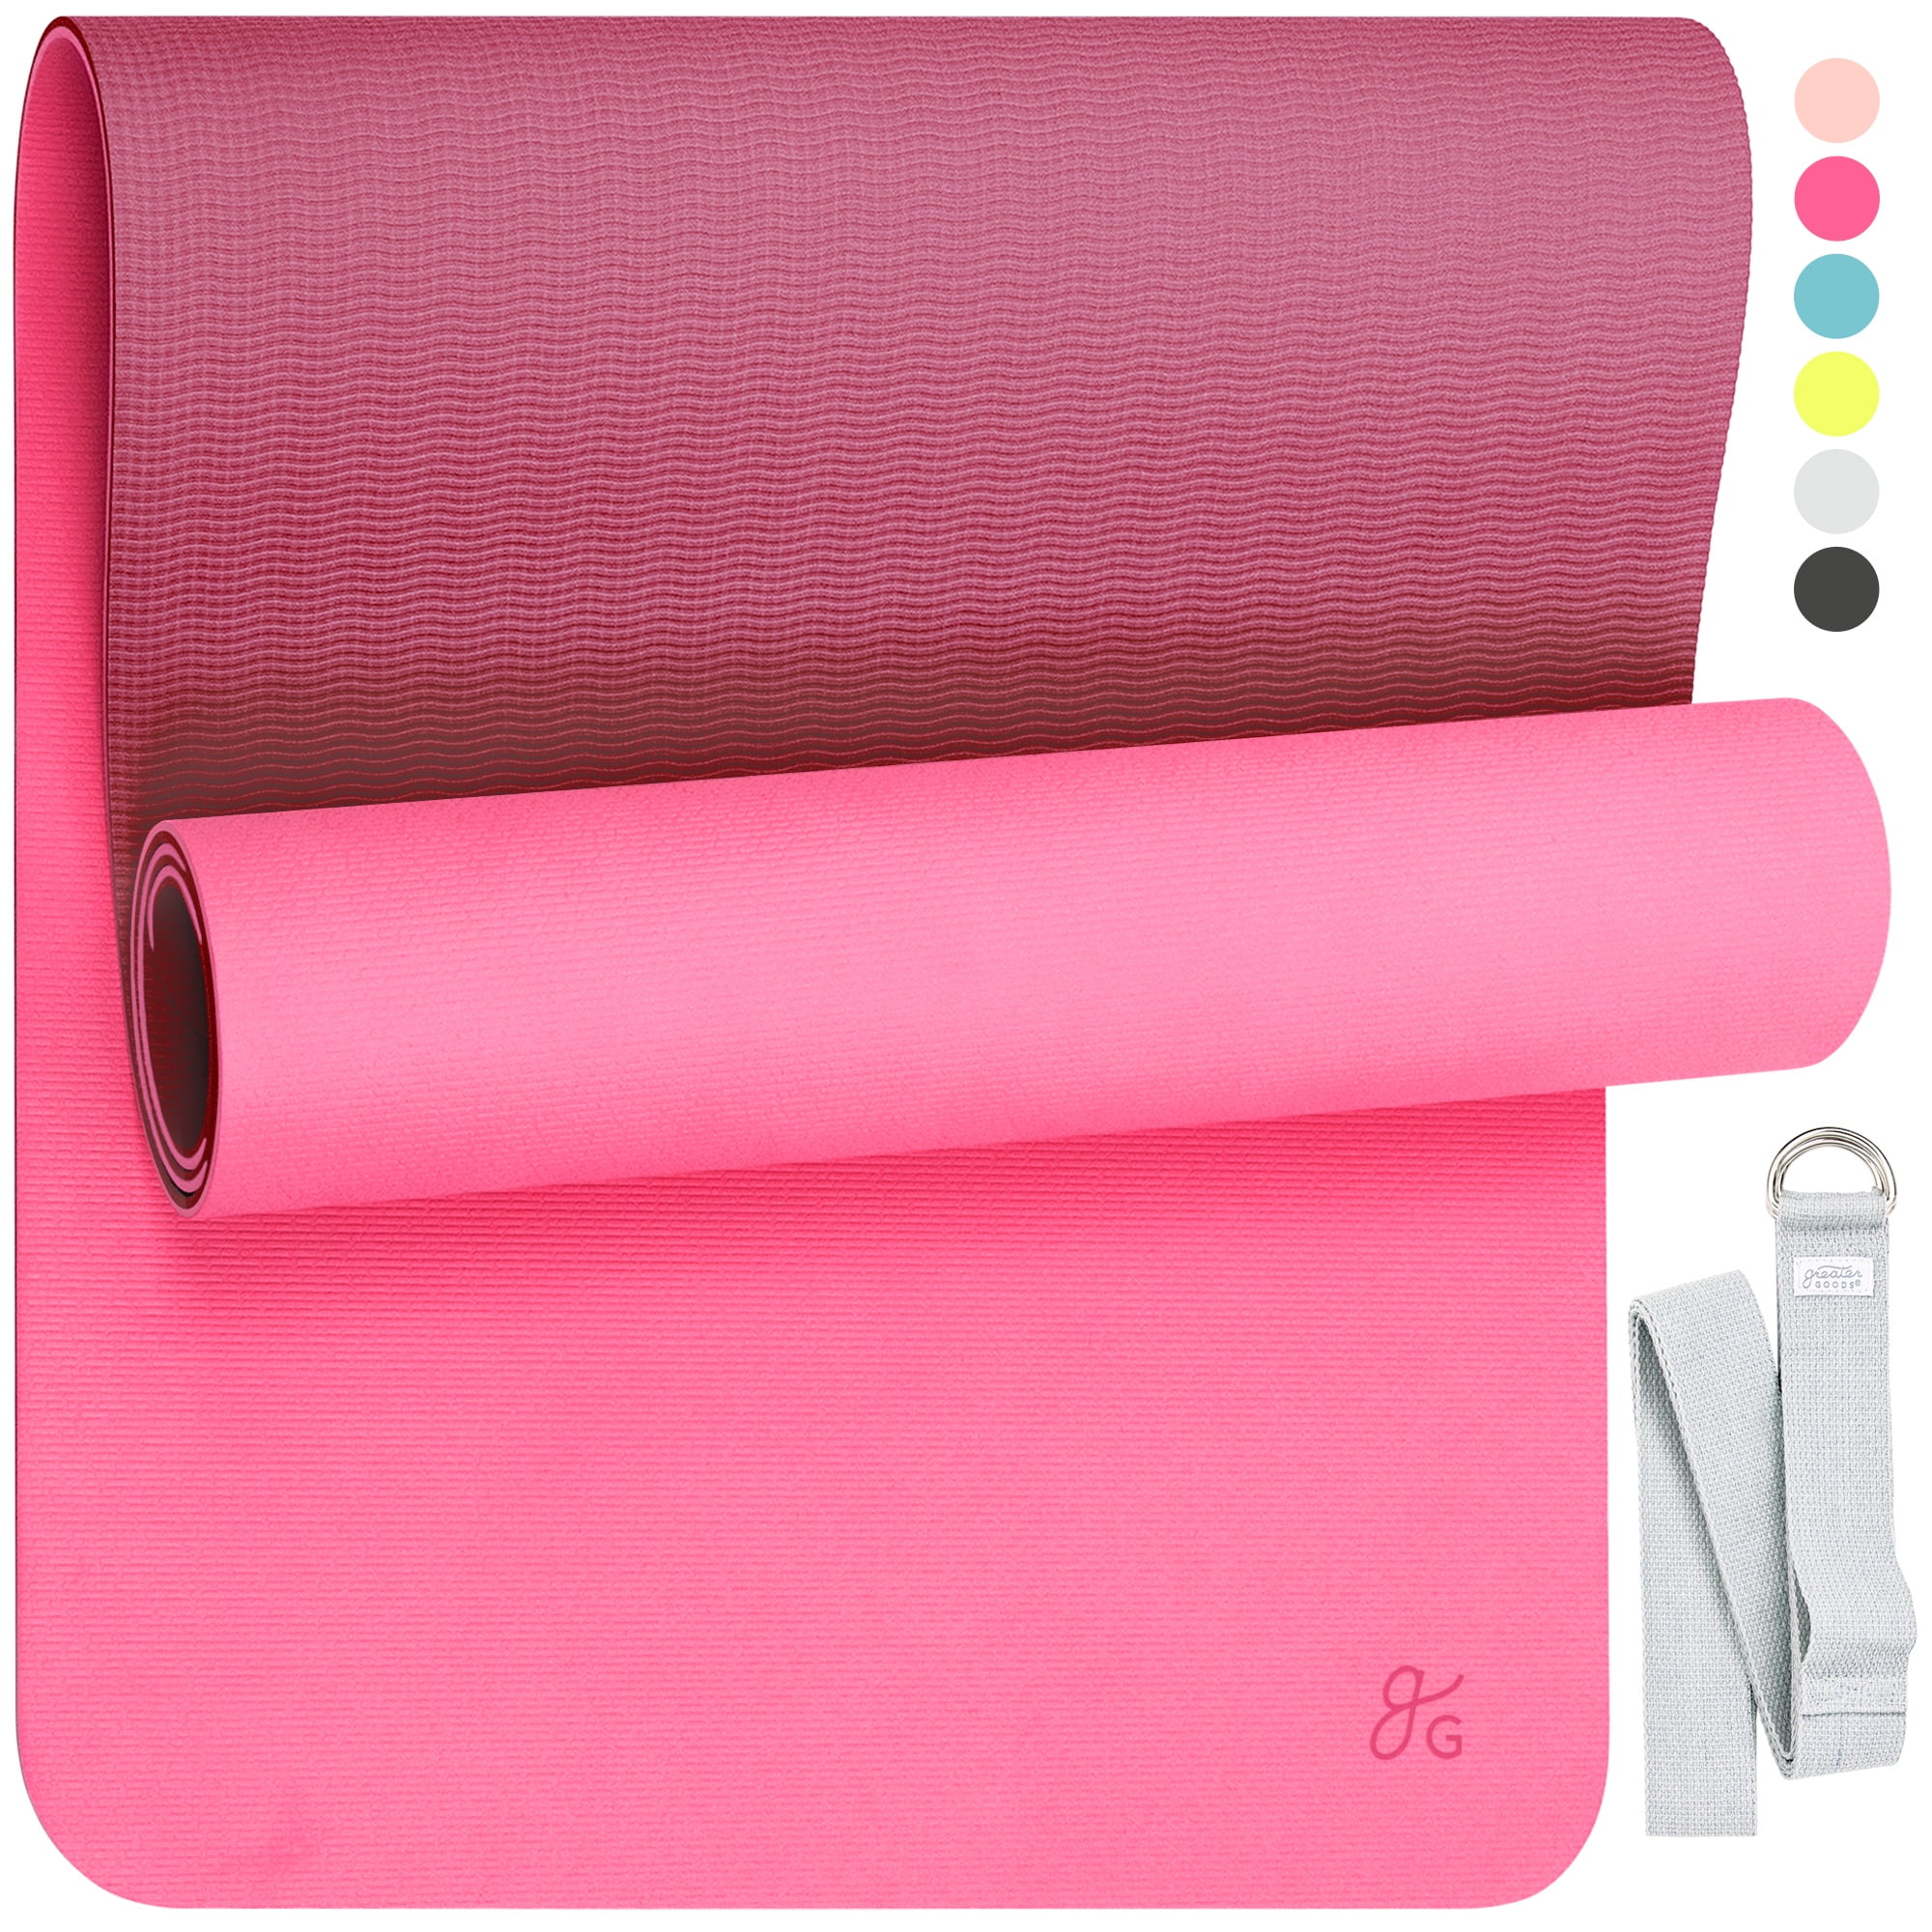 Gaiam Premium Print Yoga Mat, Pink Cherry Blossom, 6mm 